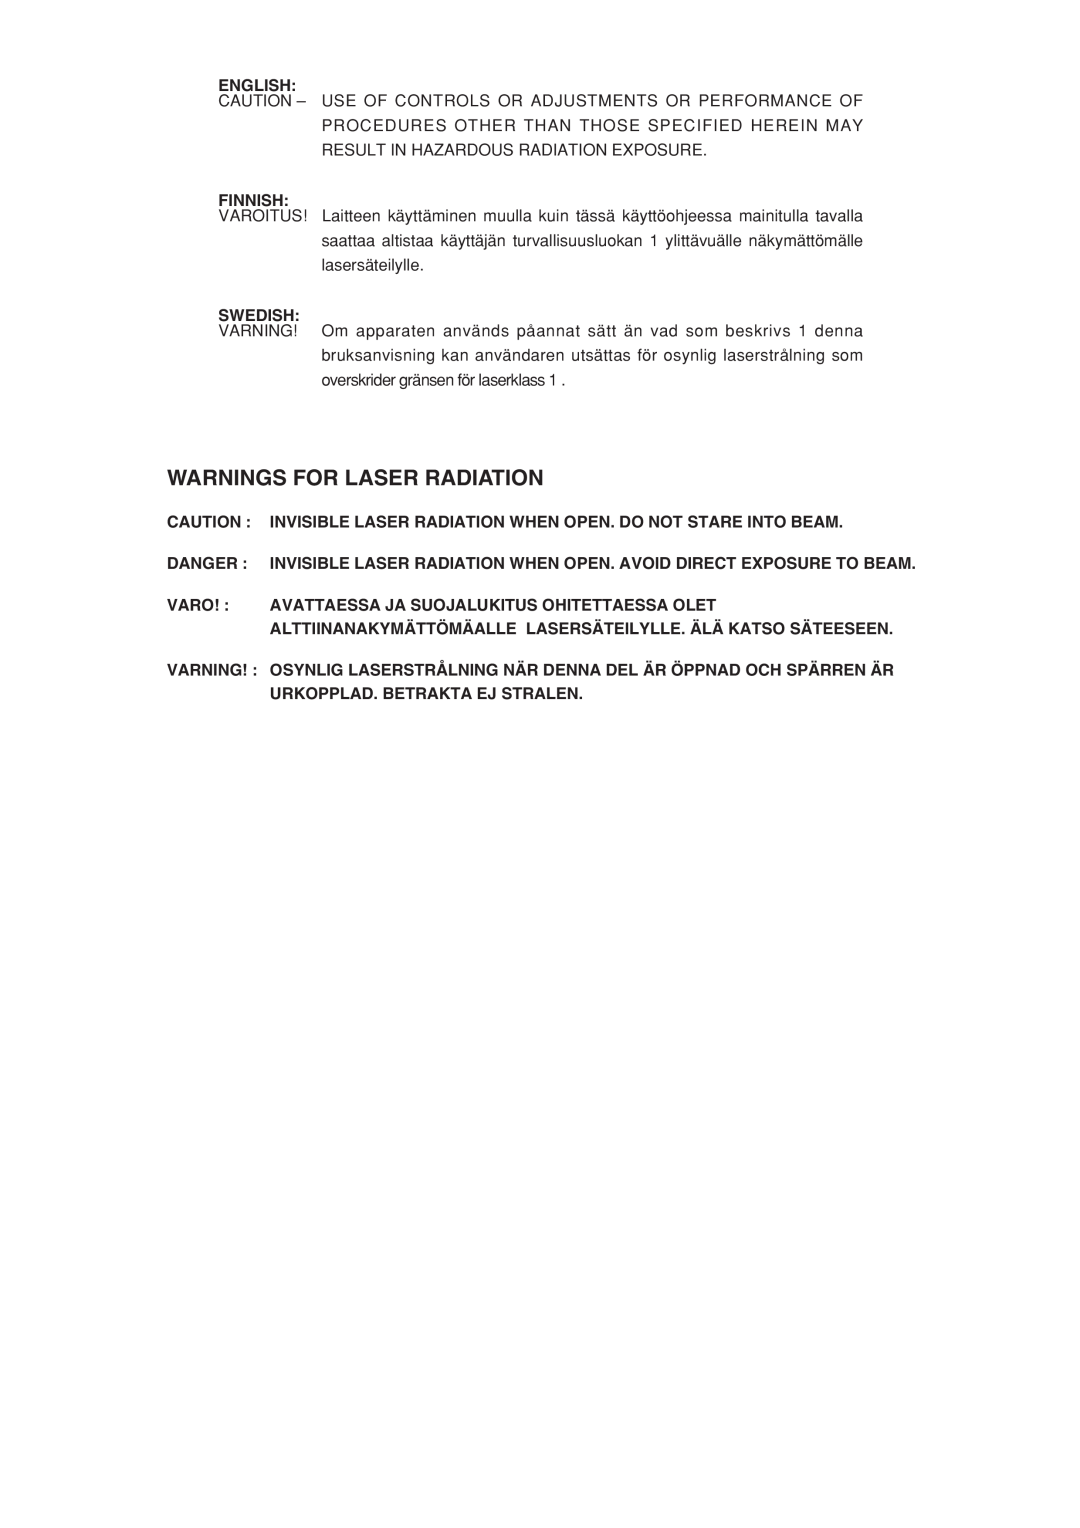 Marantz CC4300N manual Warnings For Laser Radiation 